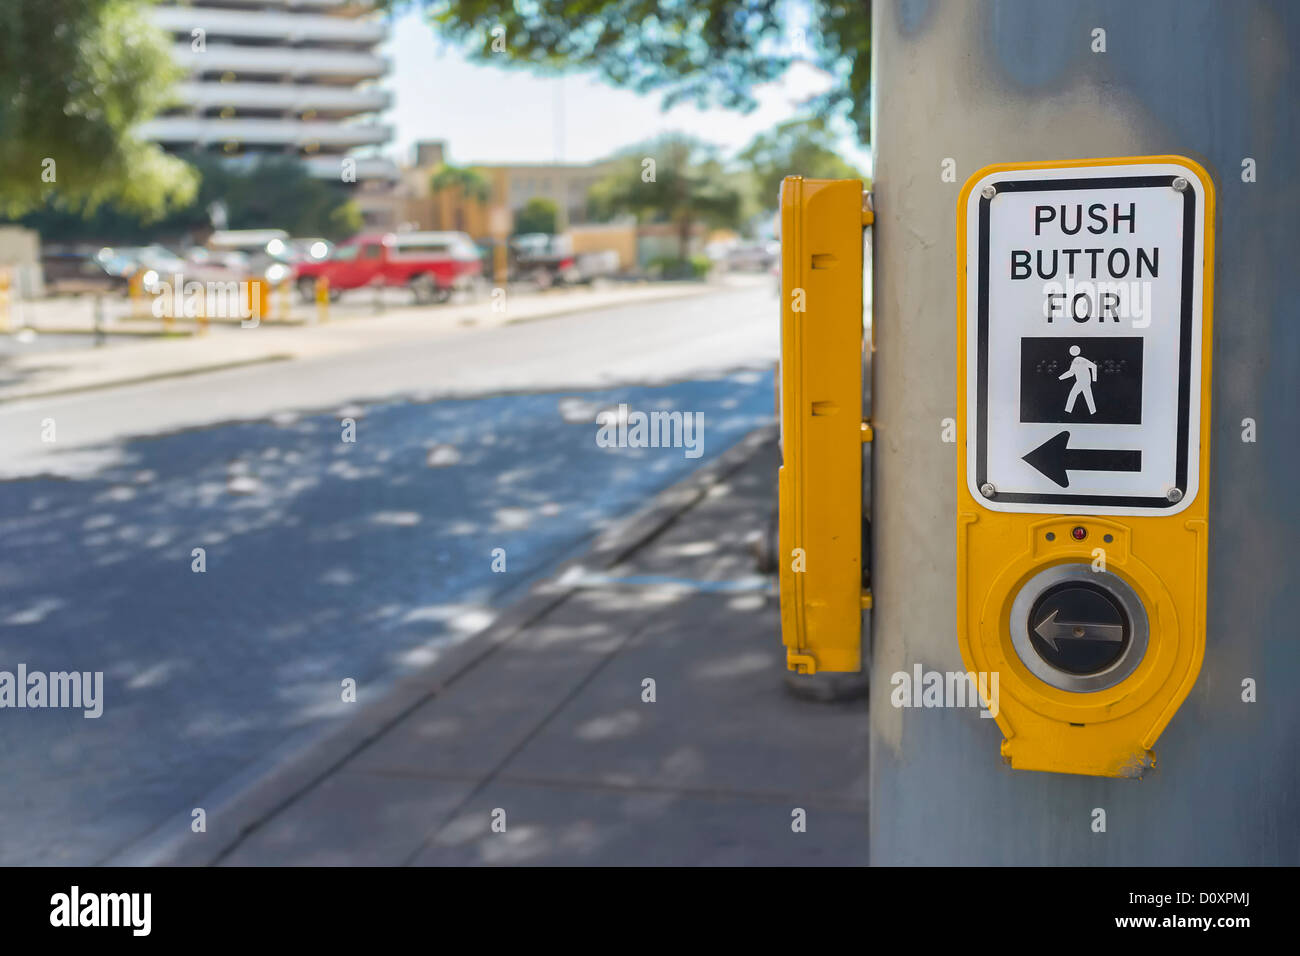 Push button for pedestrian traffic light Stock Photo